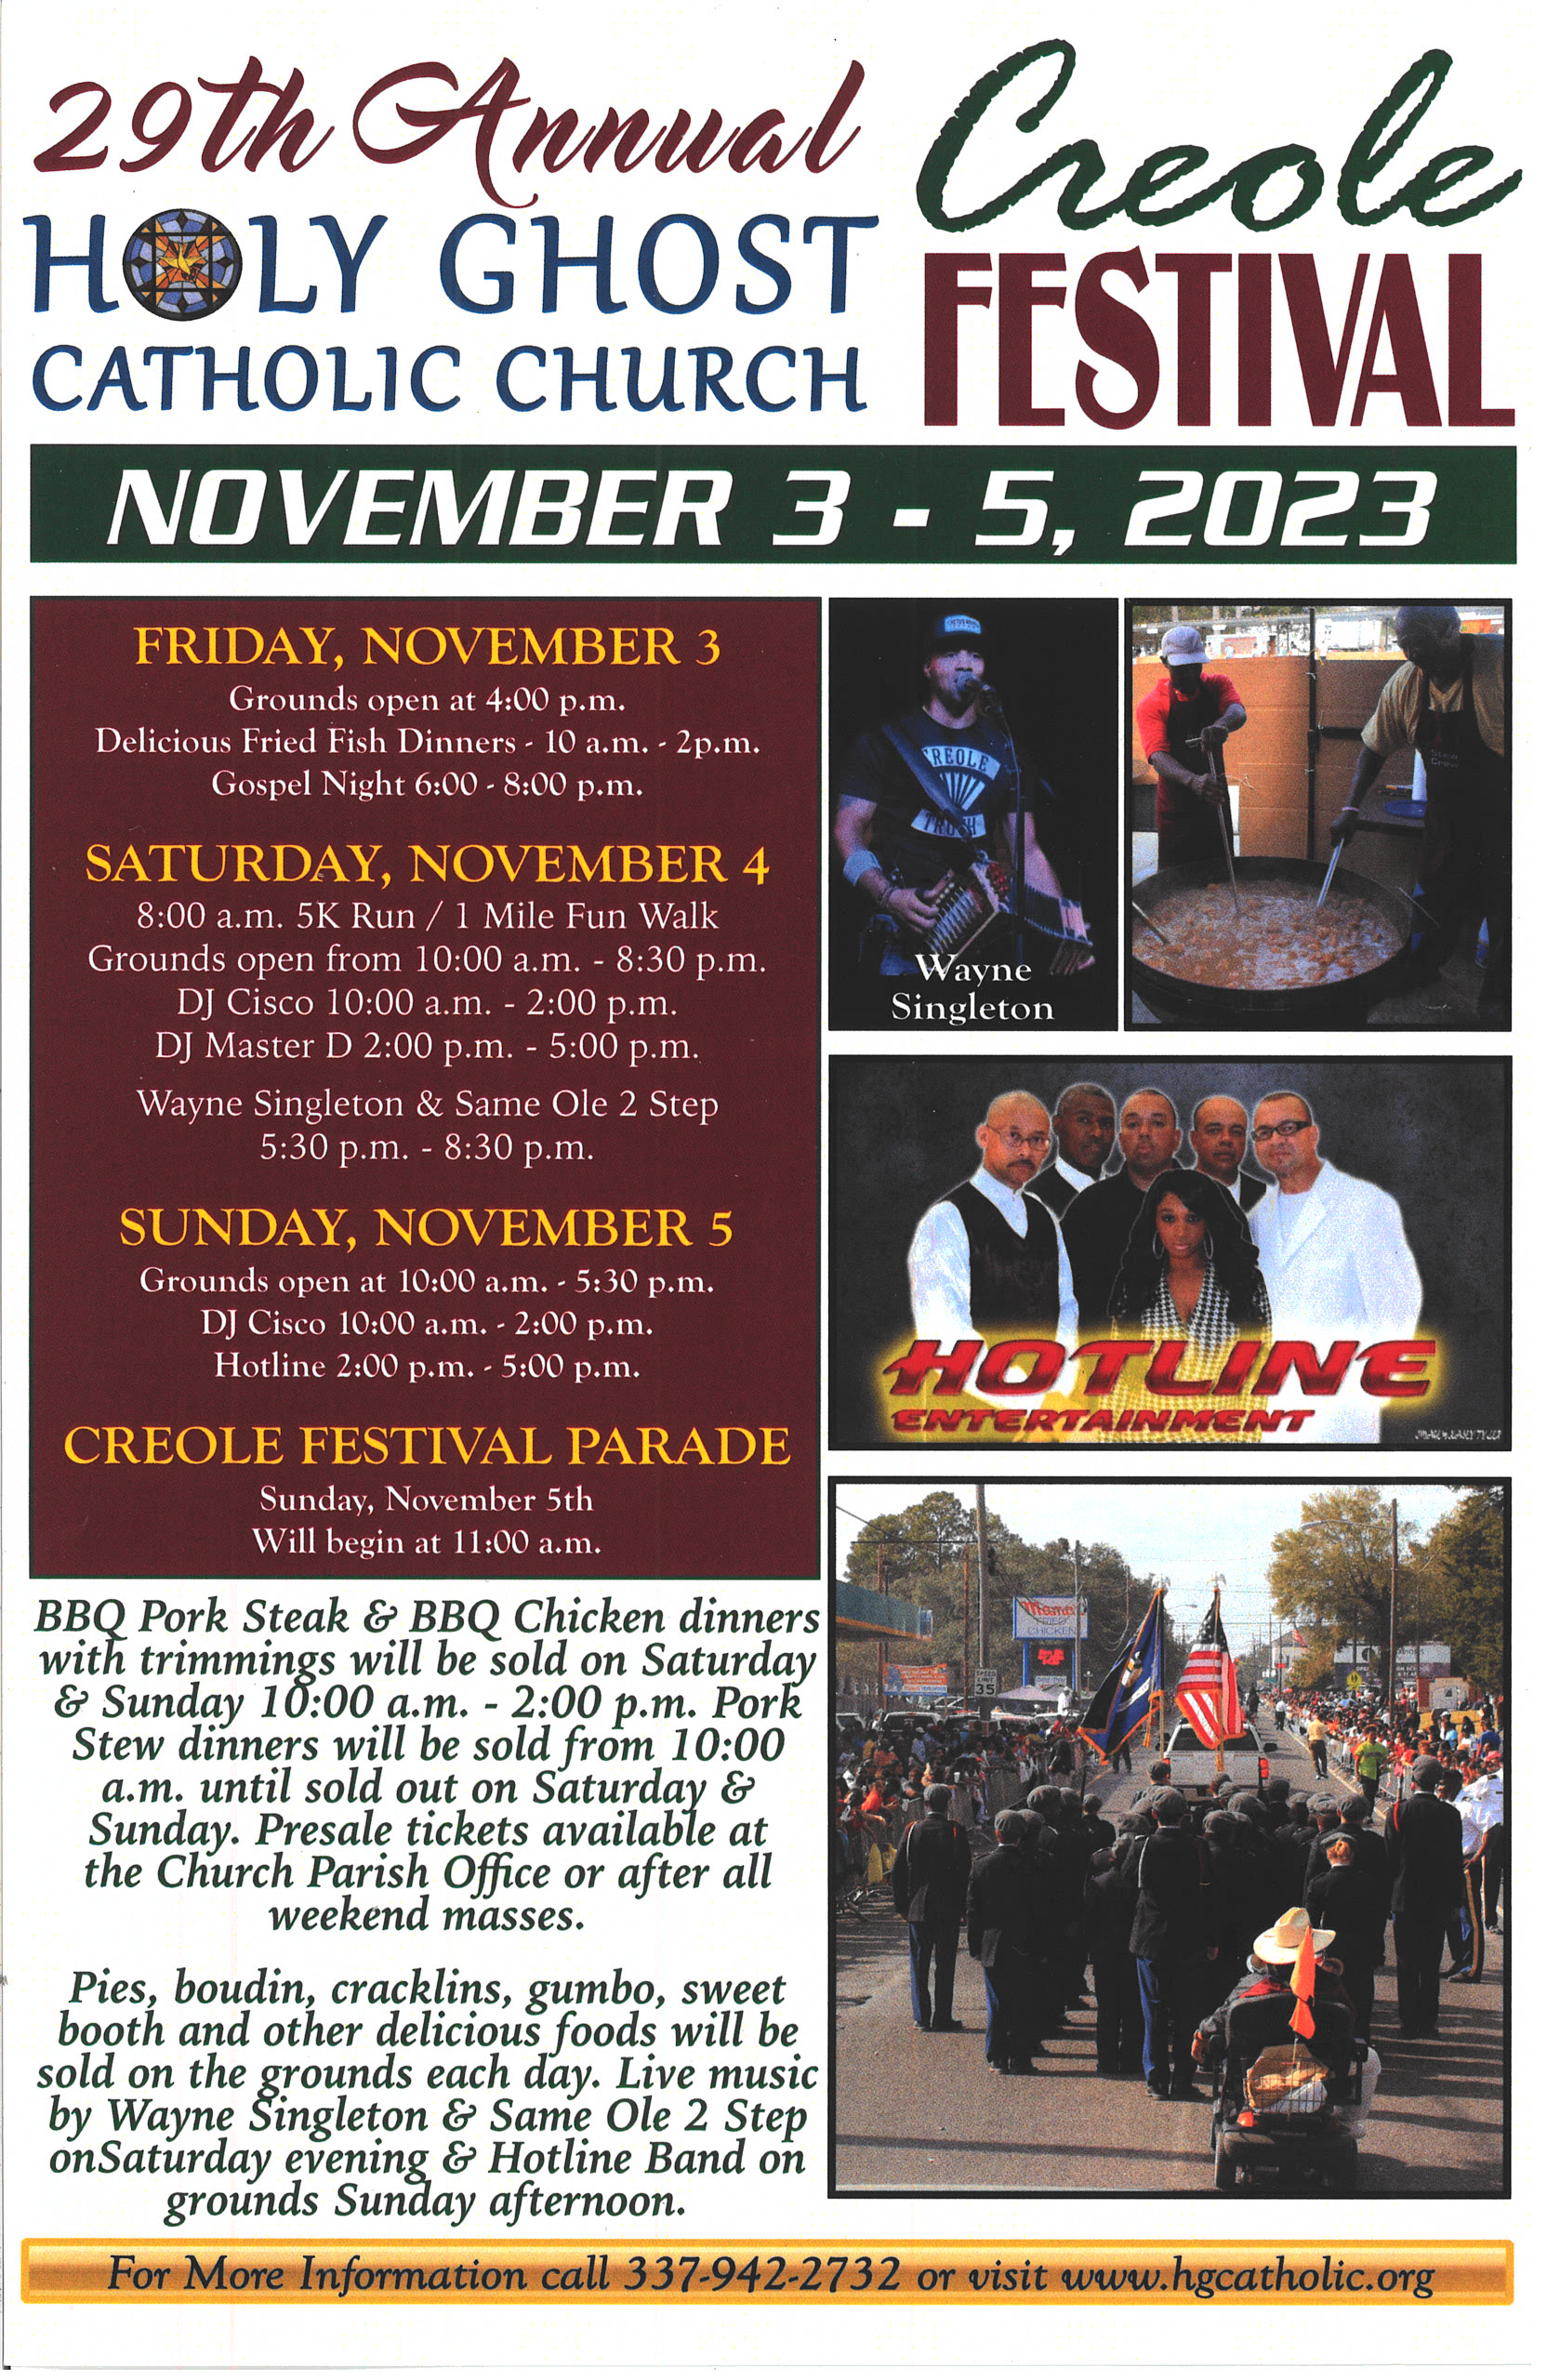 29th Annual Holy Ghost Catholic Church Creole Festival & Parade